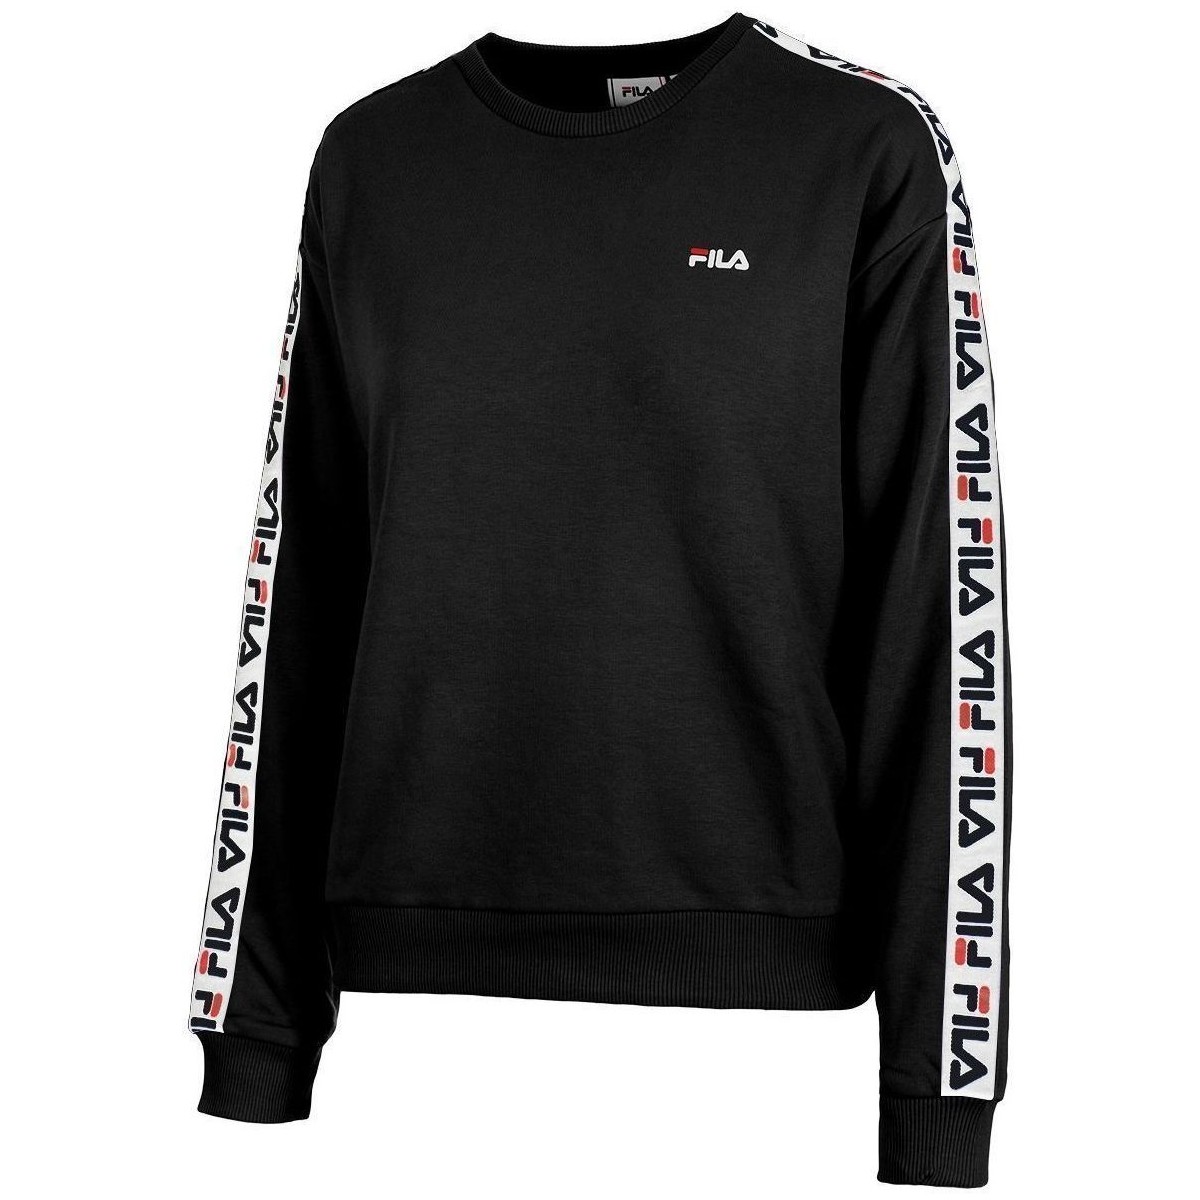 Textiel Dames Sweaters / Sweatshirts Fila TIVKA CREW SWEAT Zwart